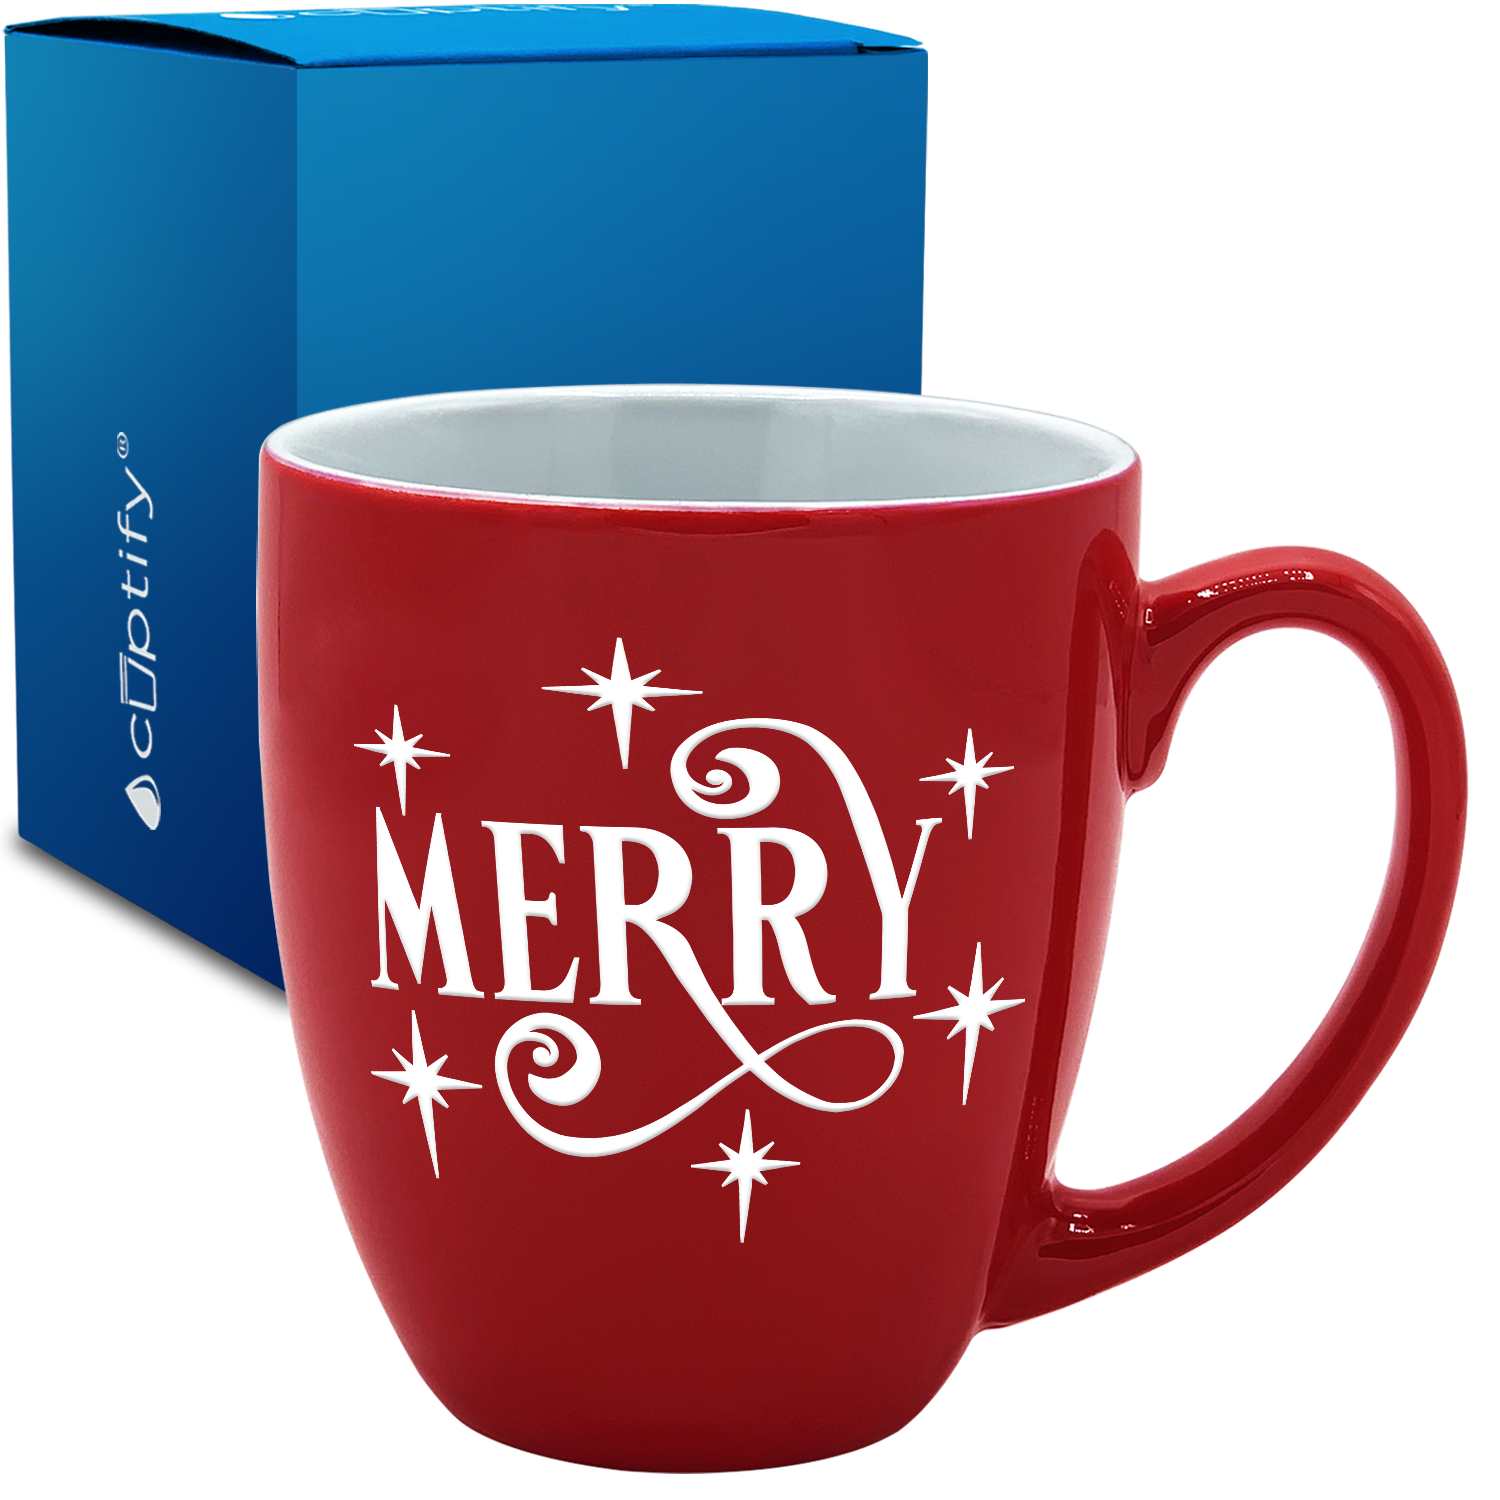 Merry 16oz Red Personalized Christmas Bistro Coffee Mug